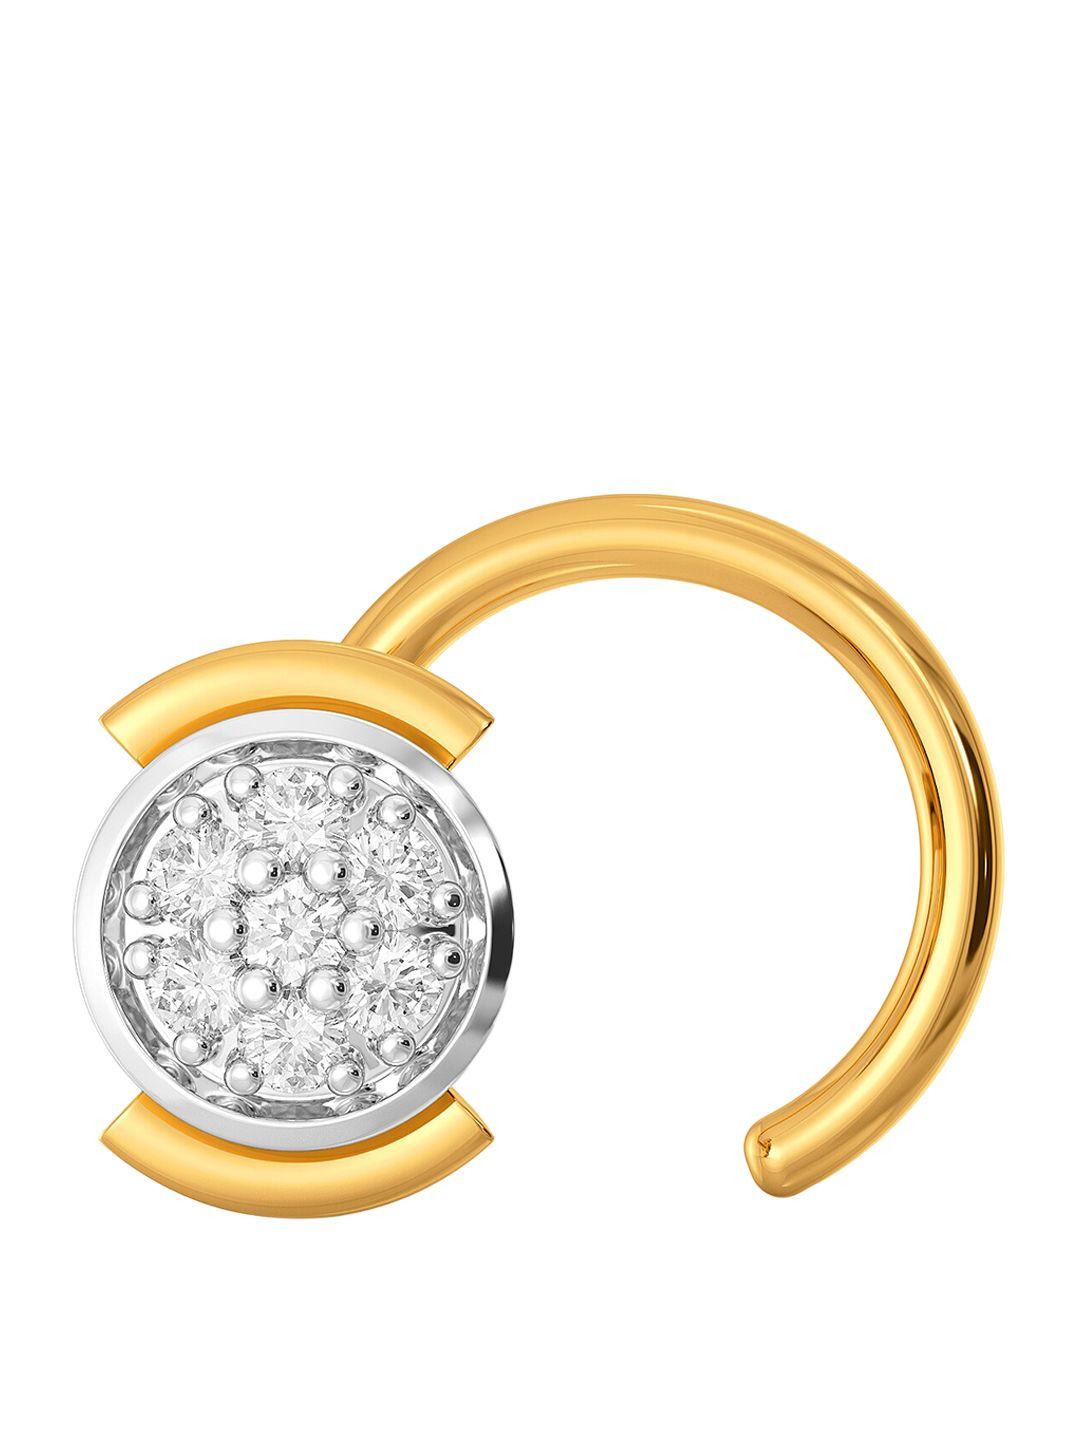 melorra work vision 18kt gold rhodium plated diamond nose pin